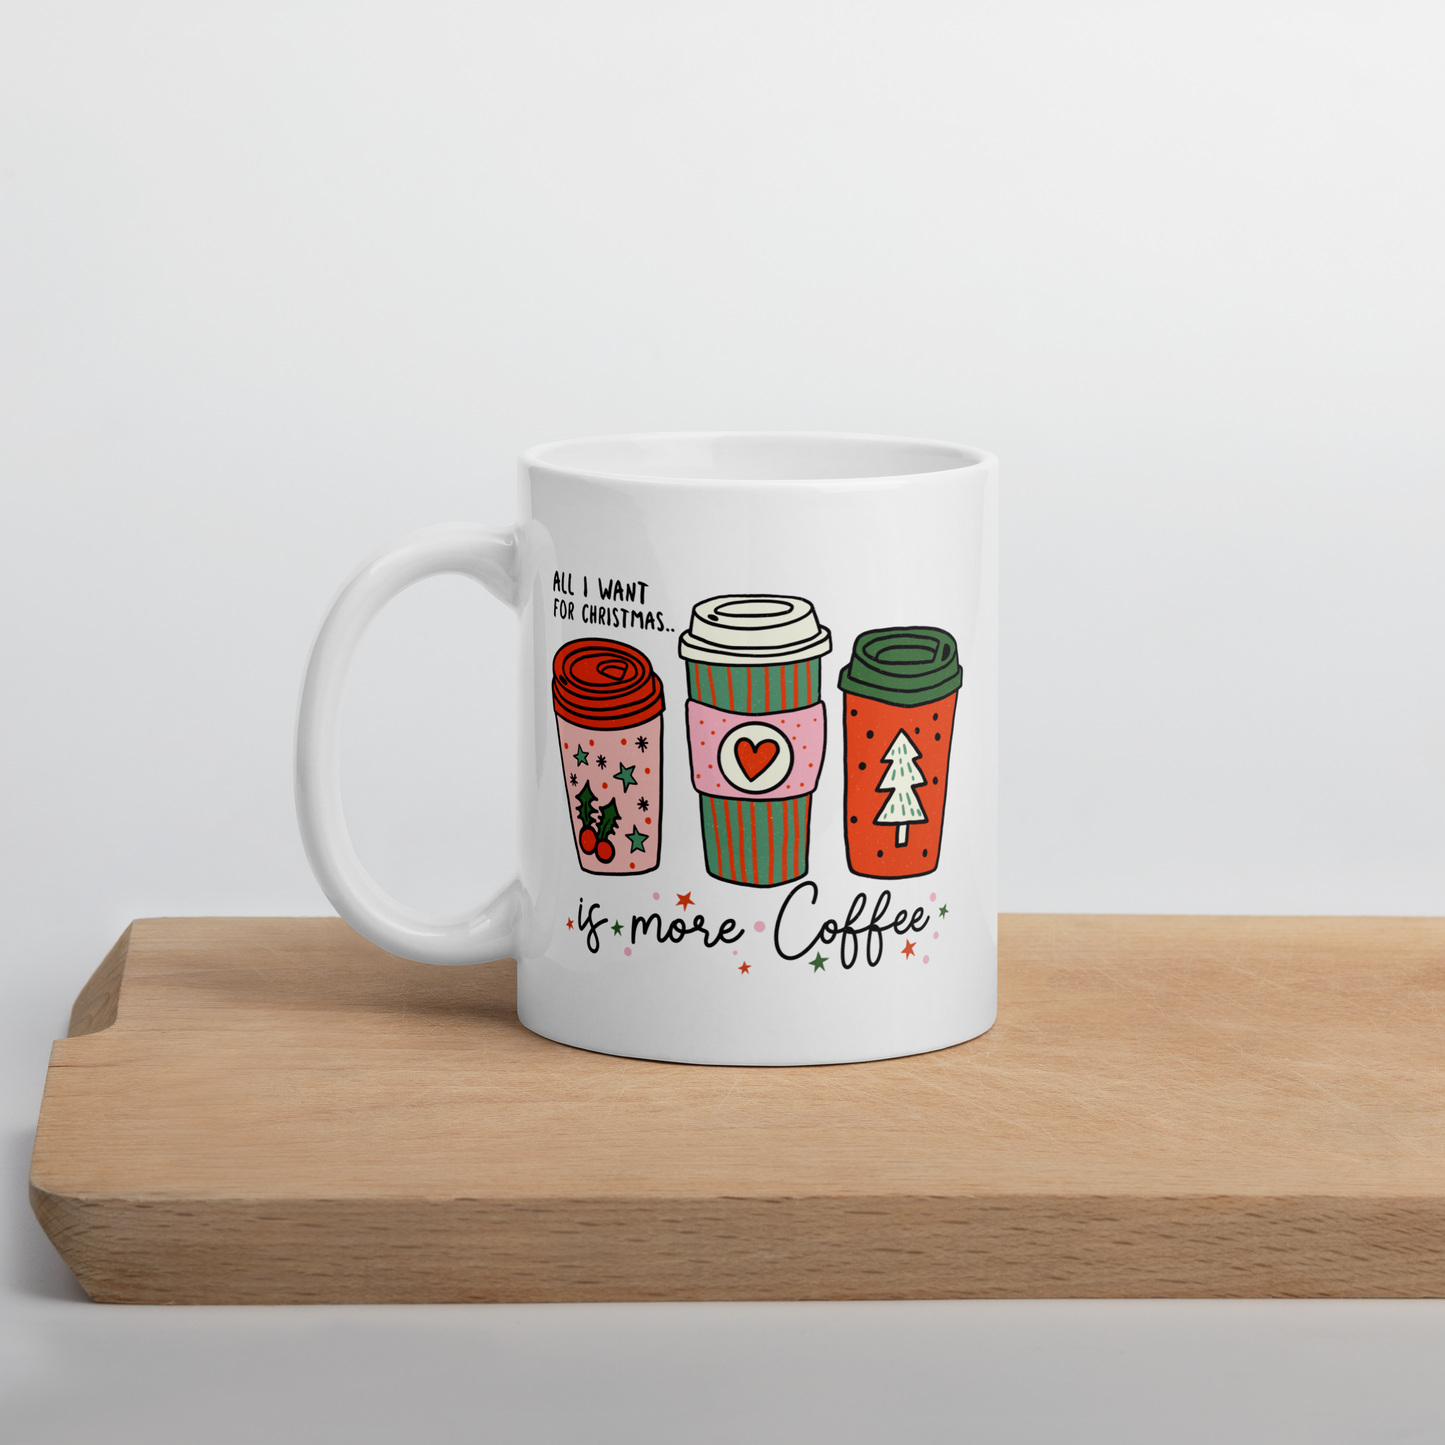 All I Want For Christmas Is More Coffee | Coffee Mug